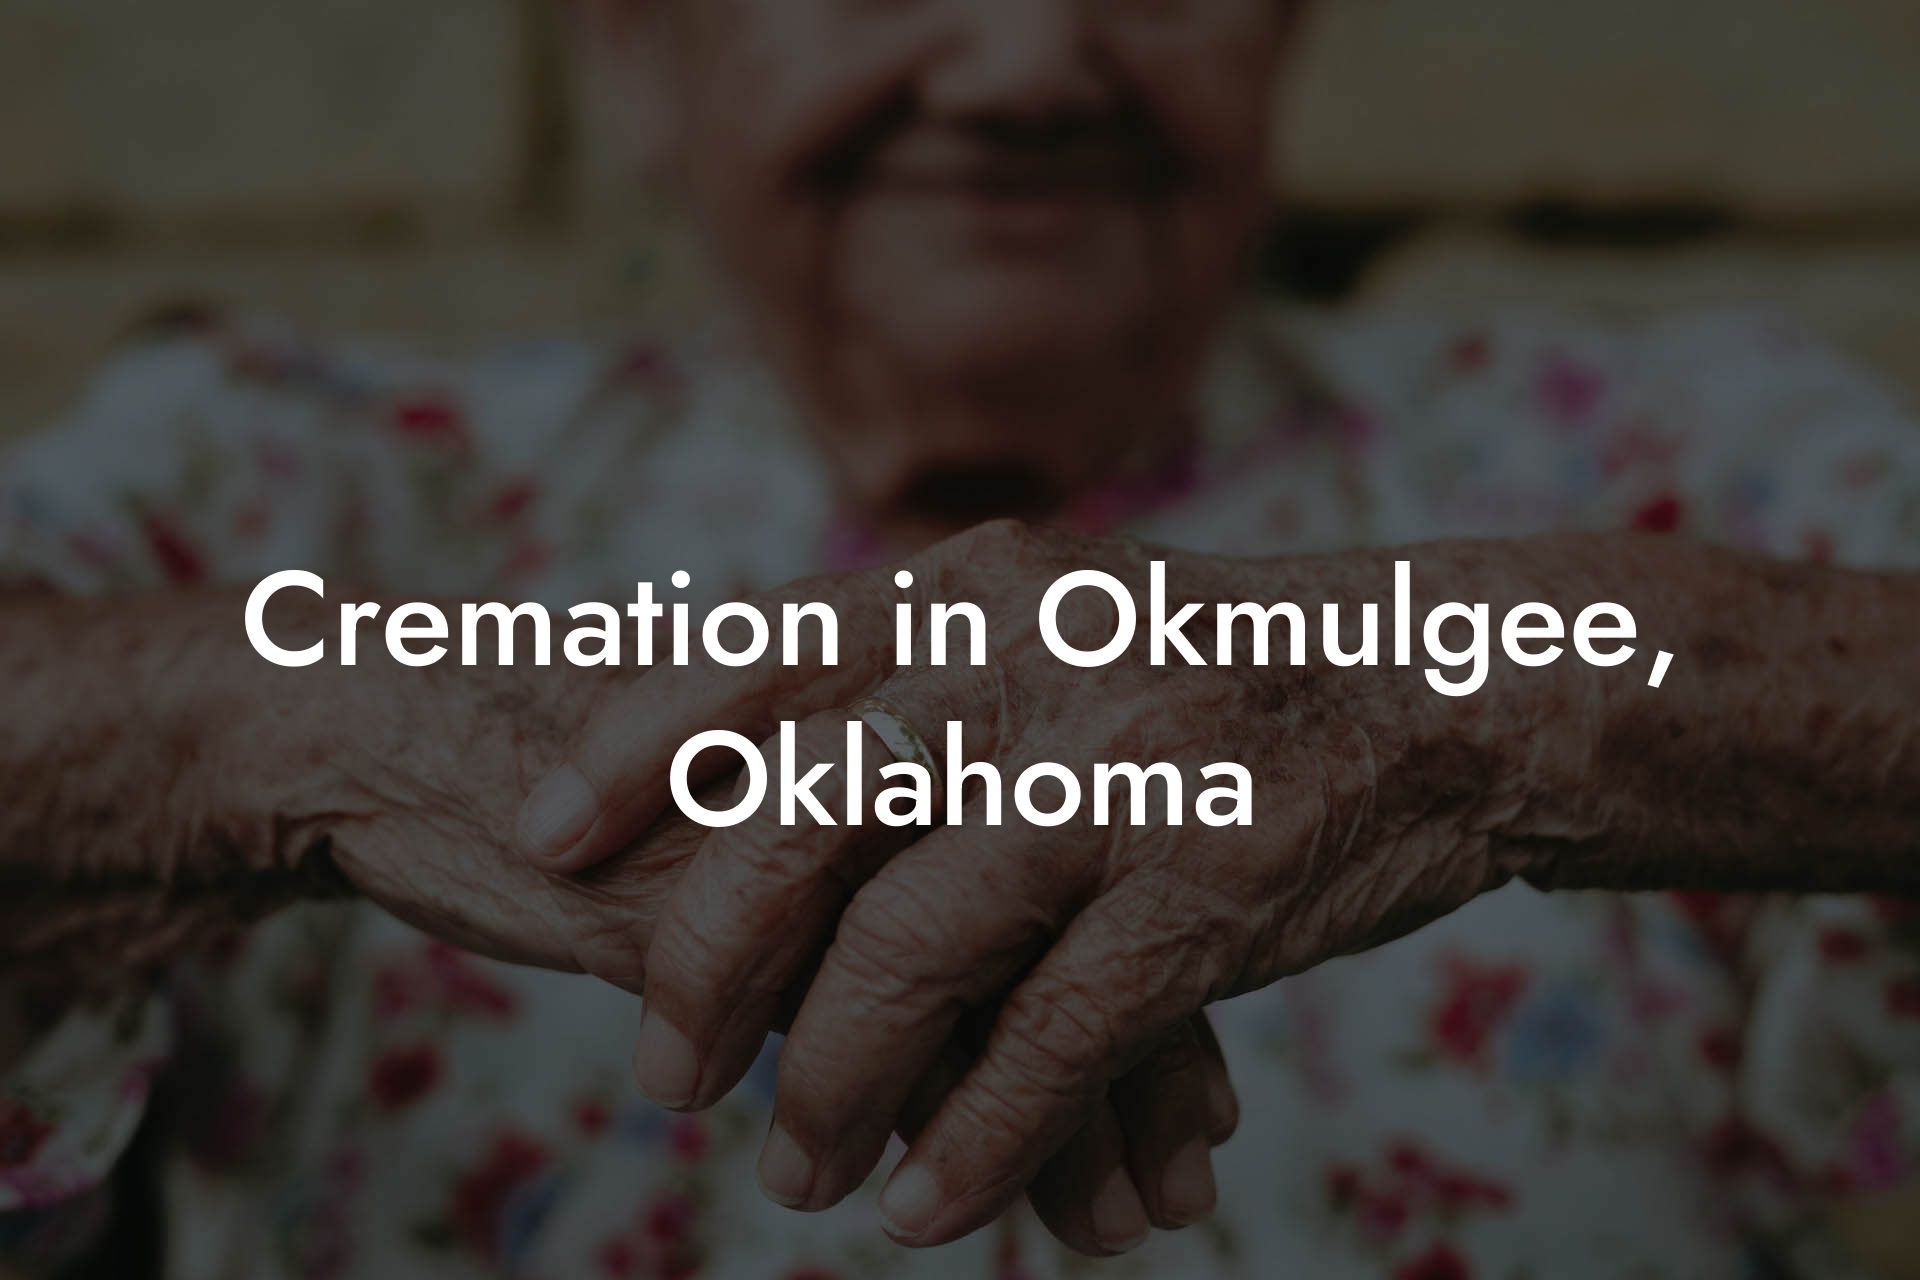 Cremation in Okmulgee, Oklahoma